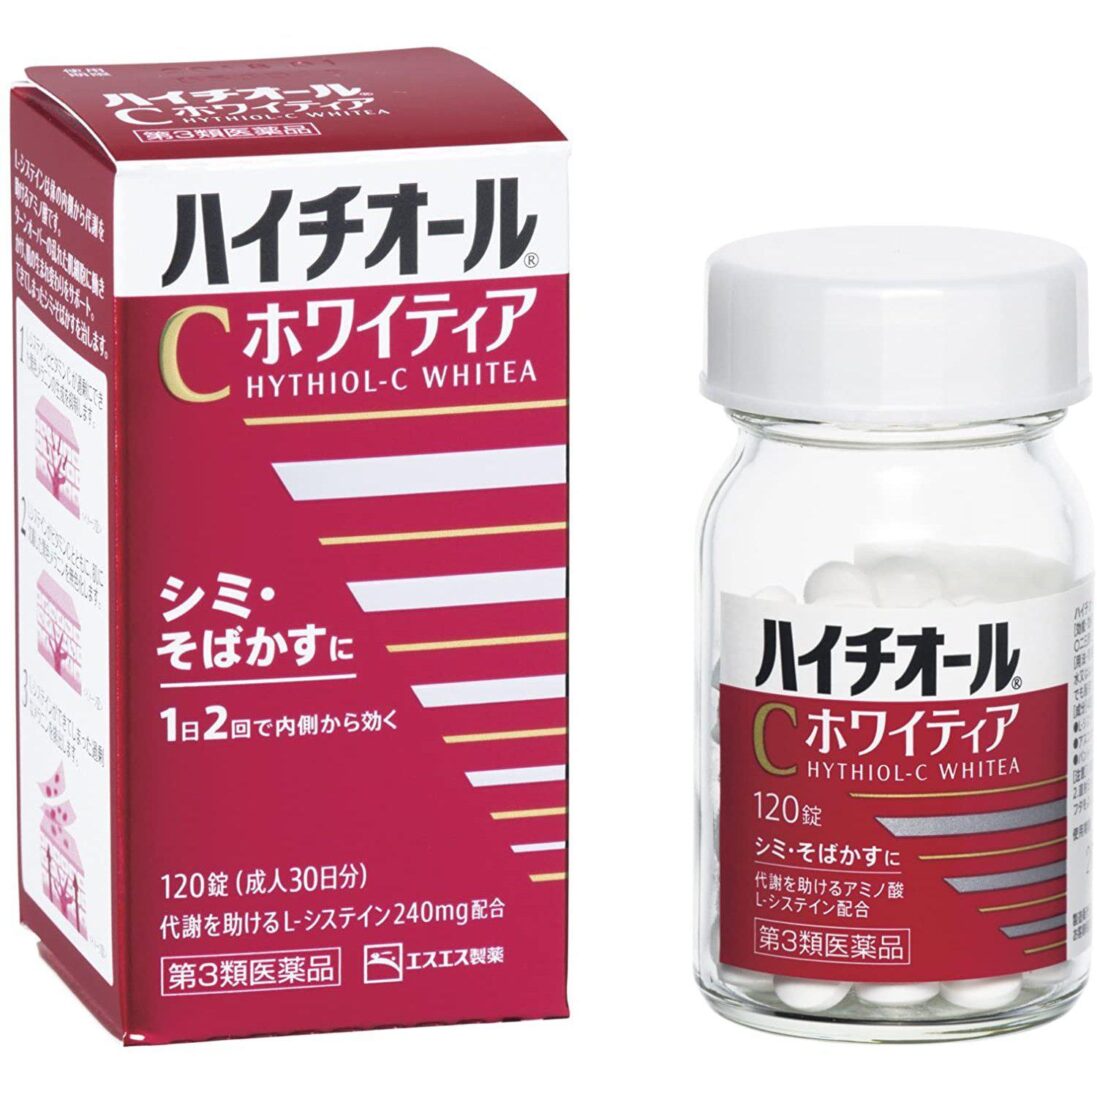 Hythiol C-Whitea Skin Whitening Supplement 120 Tablets (for 30 Days)